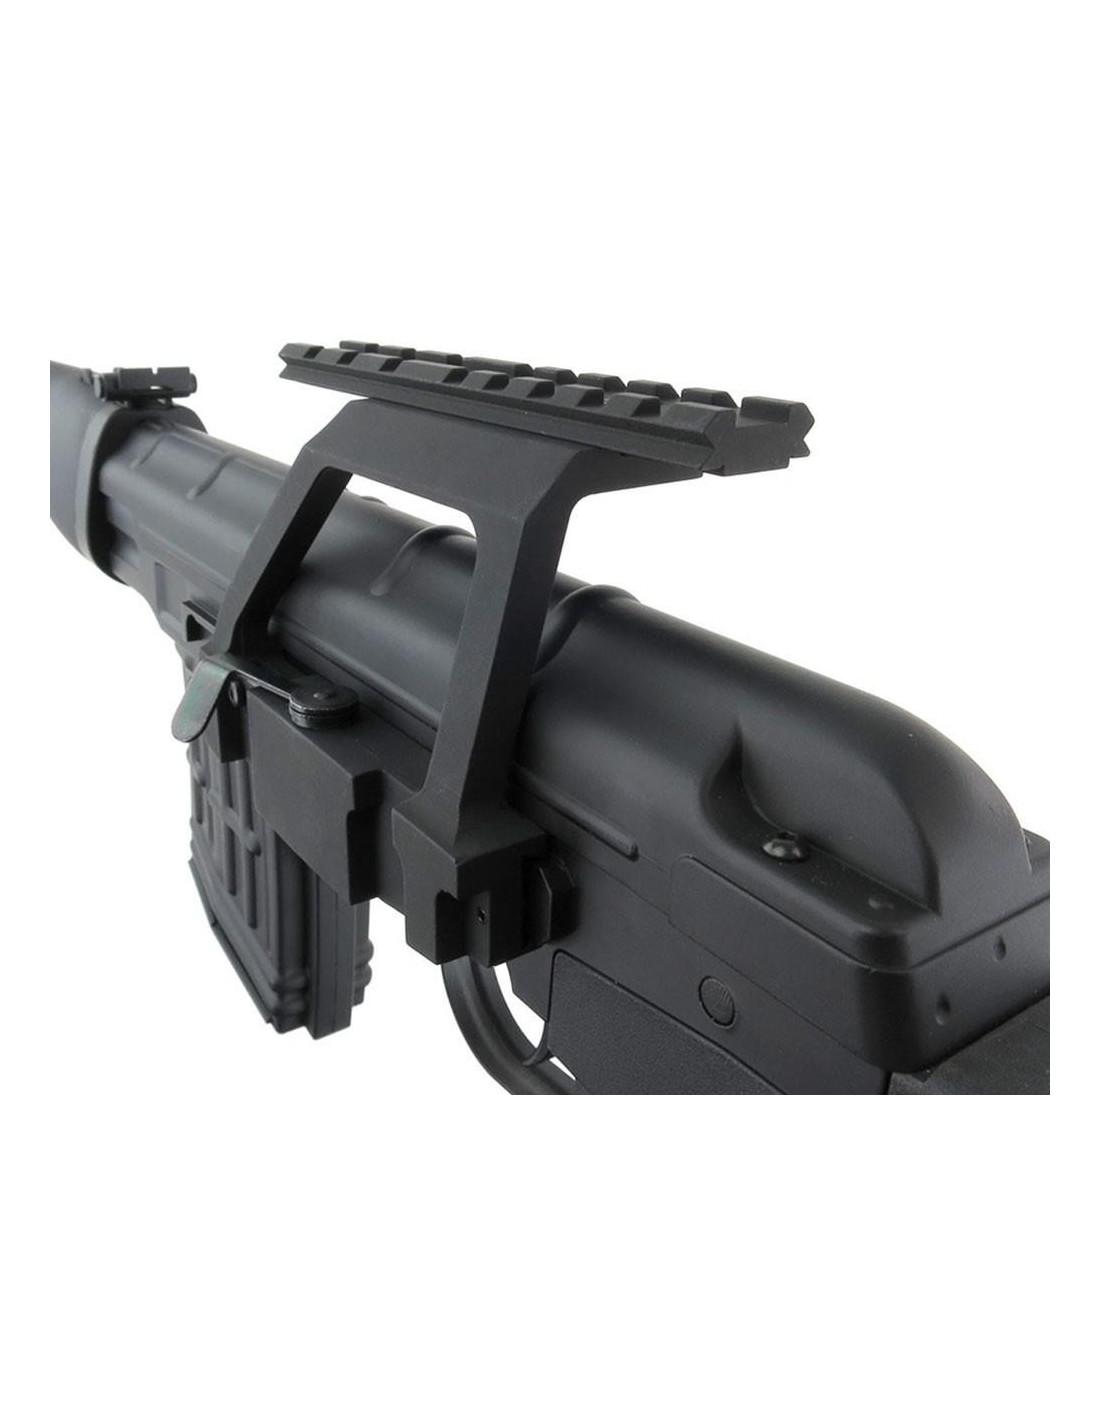 Mounting rail for AKM / AK105 / AKS74U / SVD riflescope - SG Trade